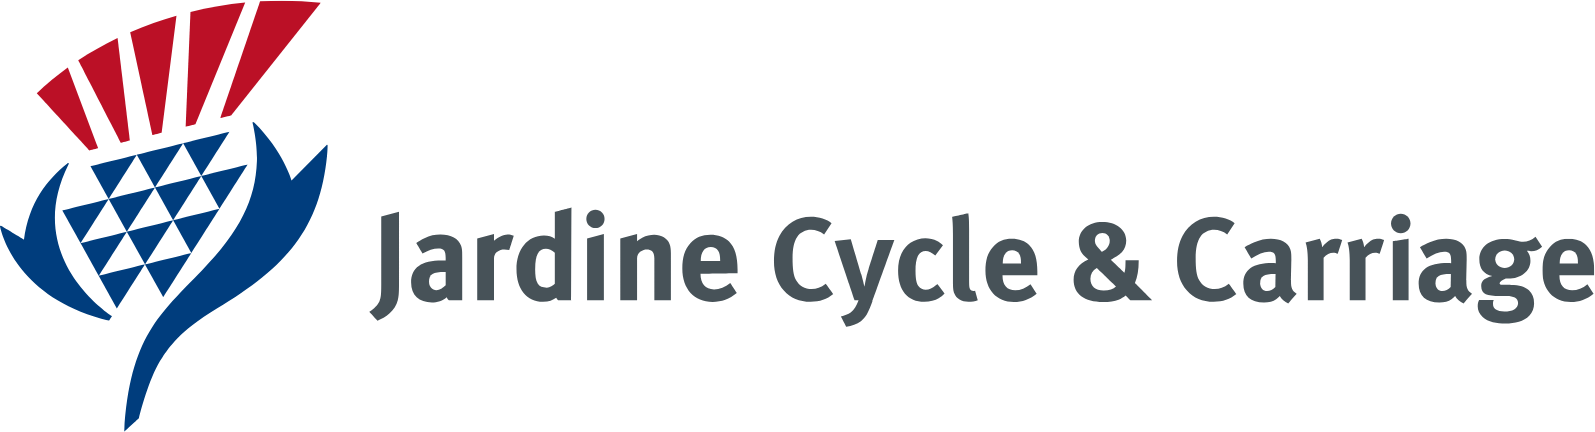 Jardine Cycle & Carriage logo large (transparent PNG)